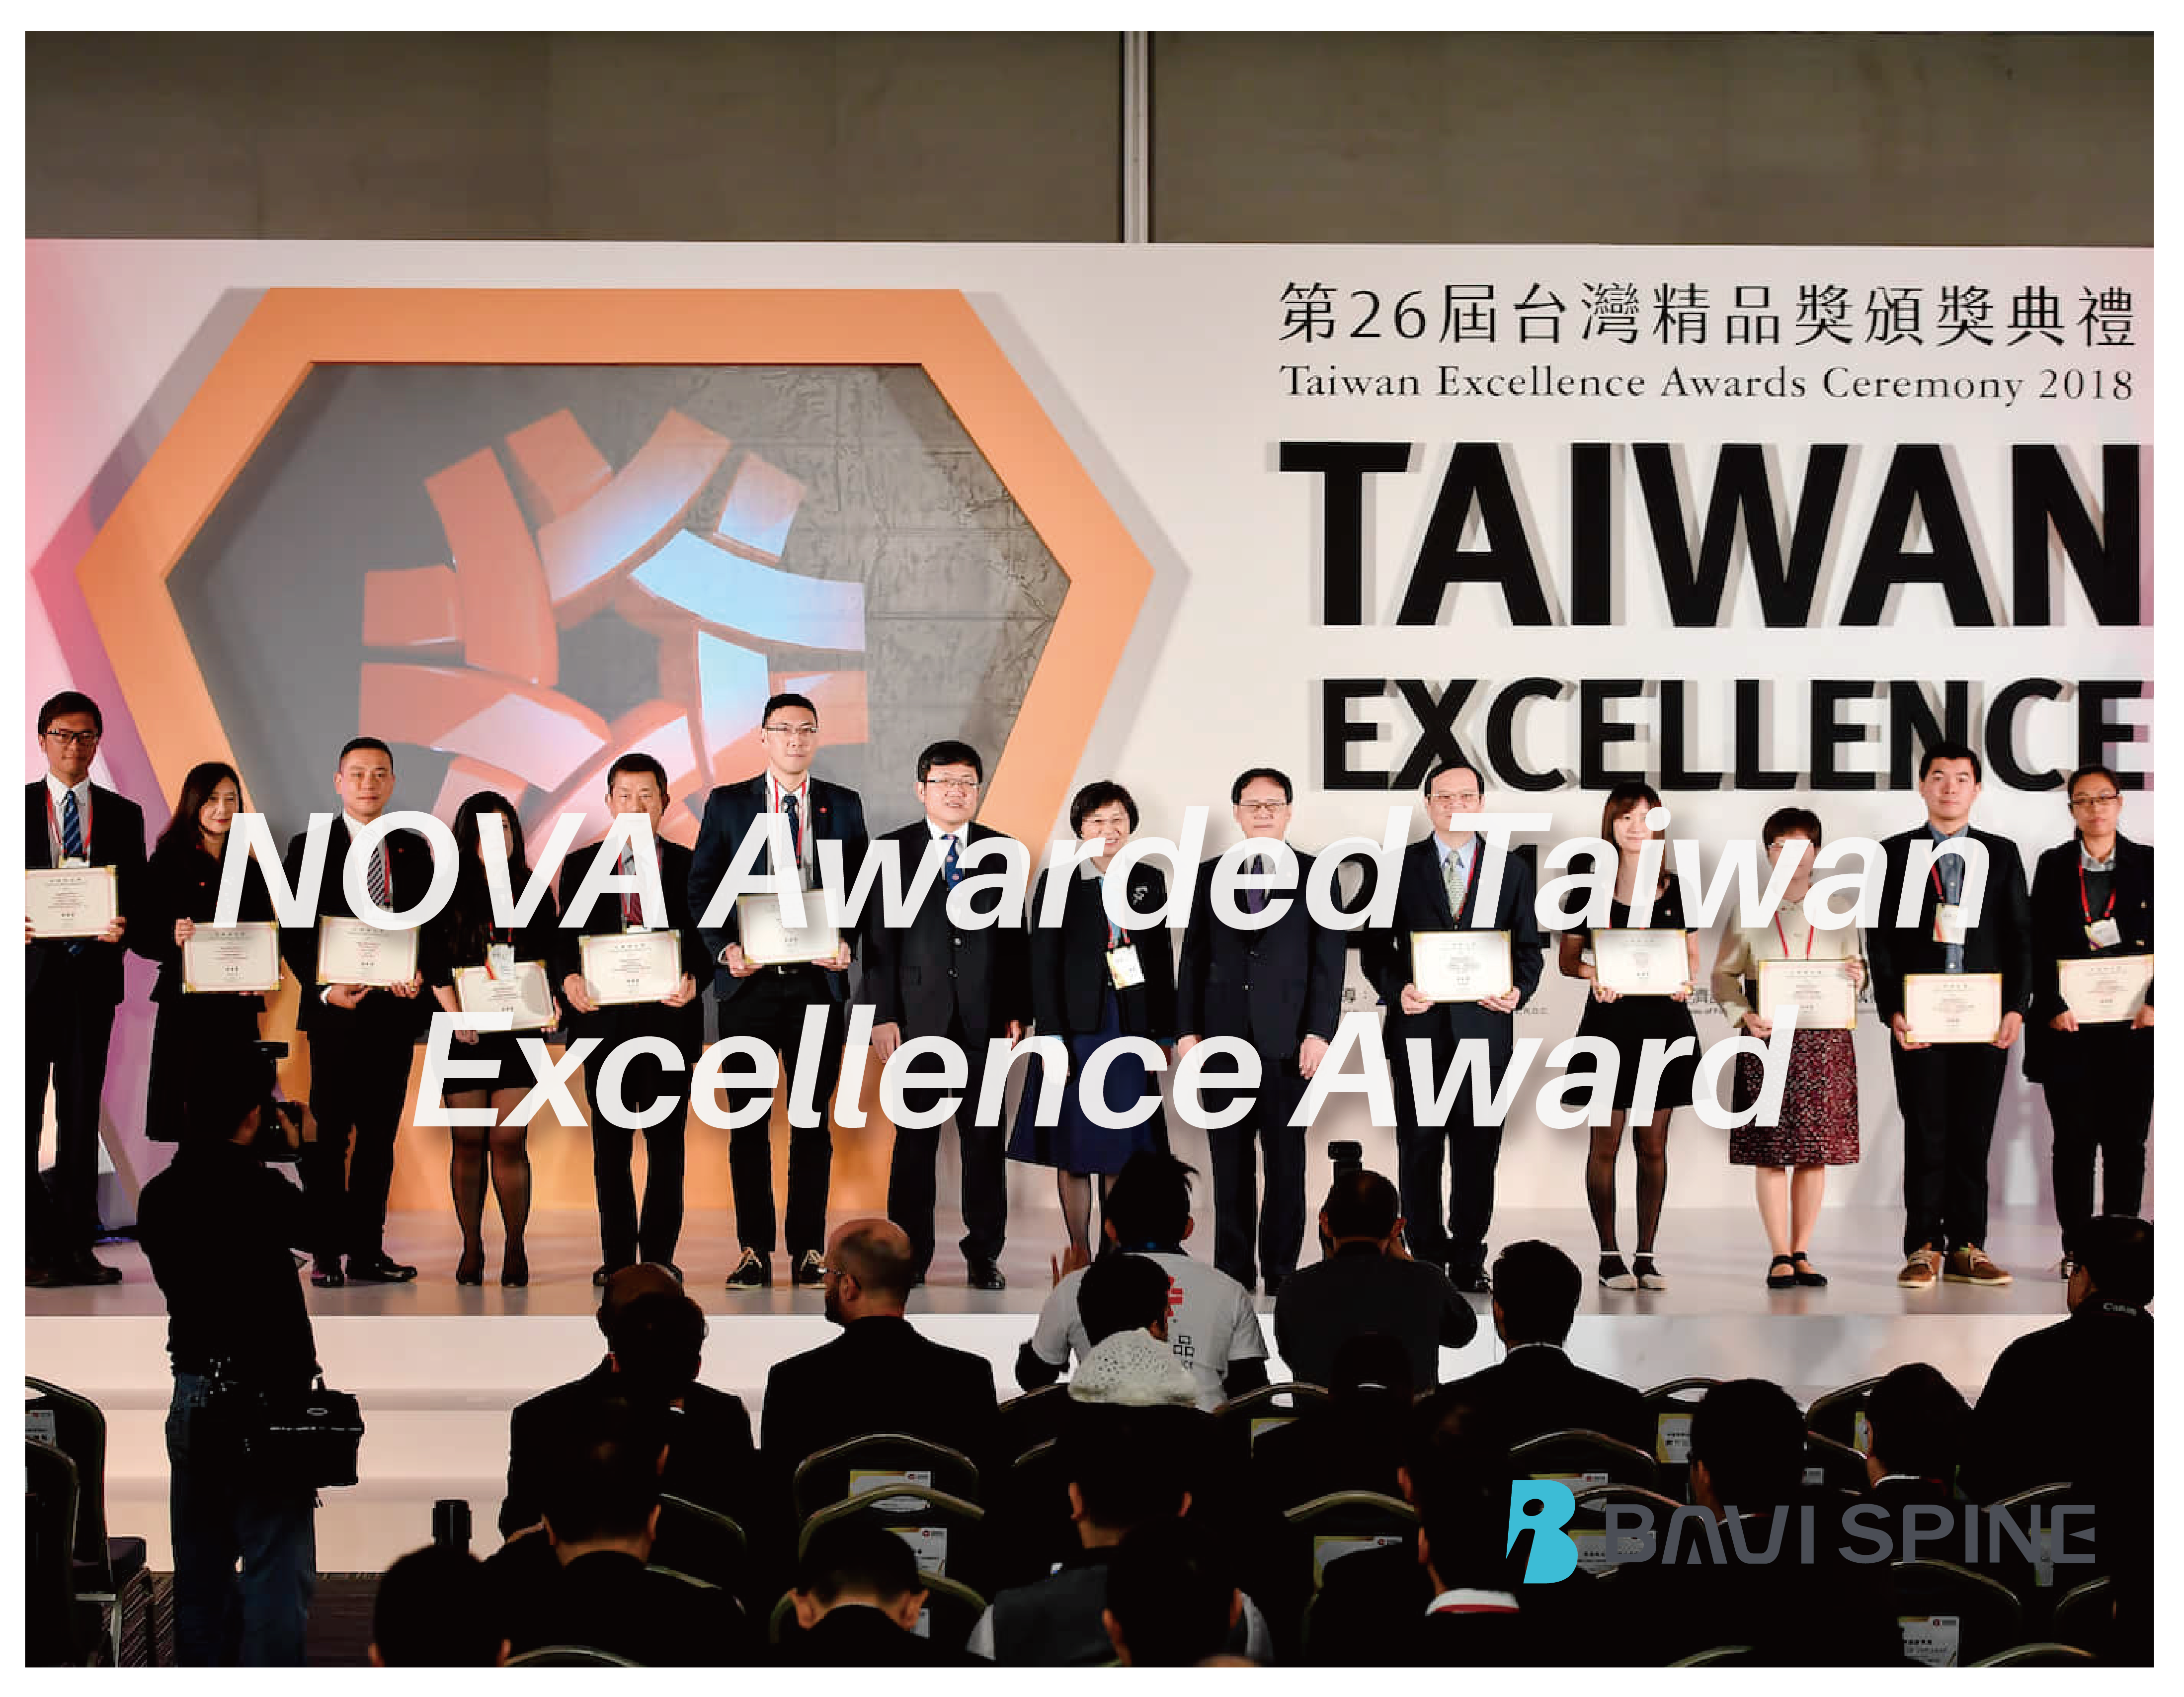 BAUI given 2018 Taiwan Excellence Award